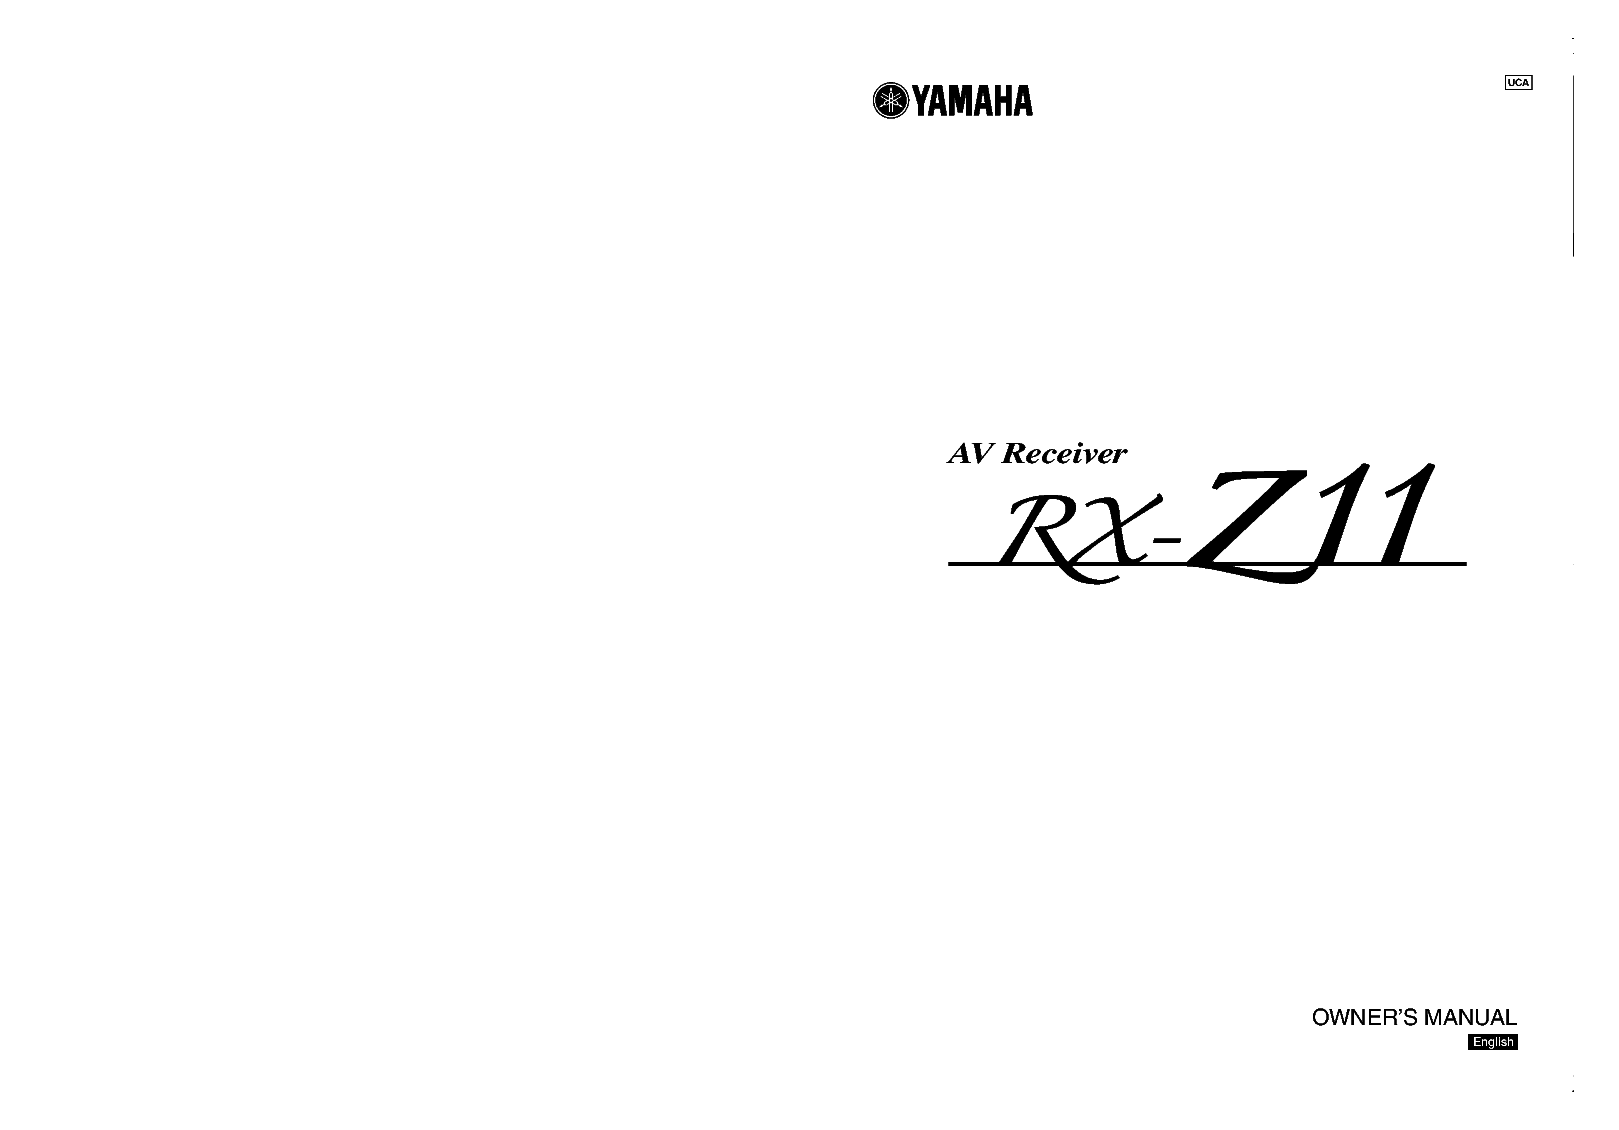 YAMAHA RX-Z11 RECEIVER USER MANUAL Service Manual download, schematics